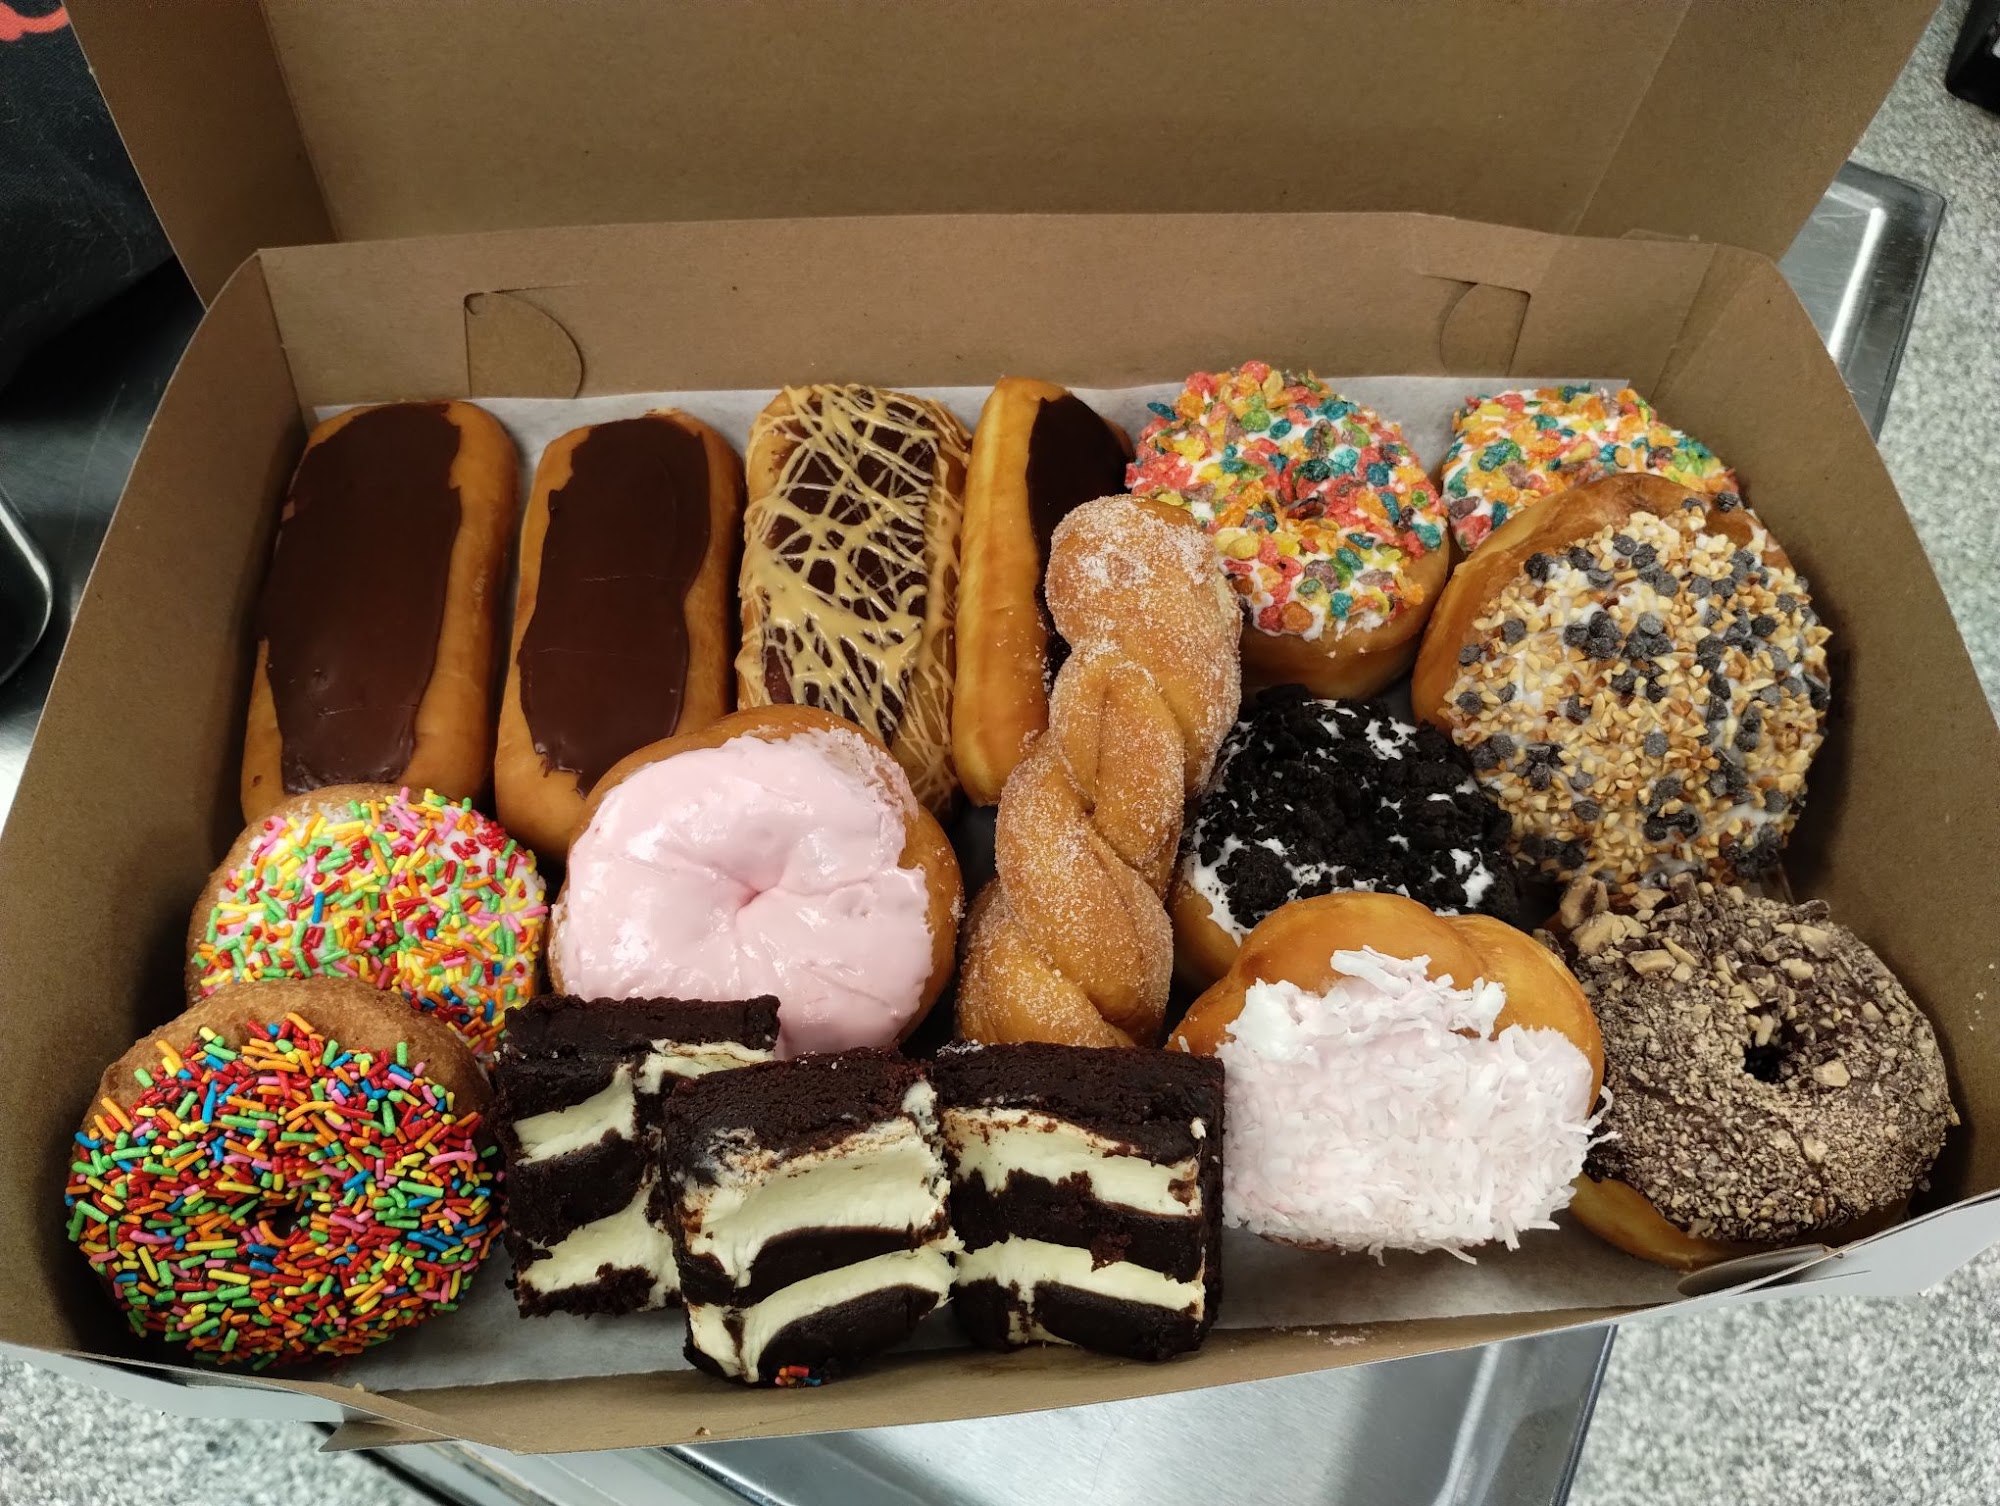 Sandy's Donuts